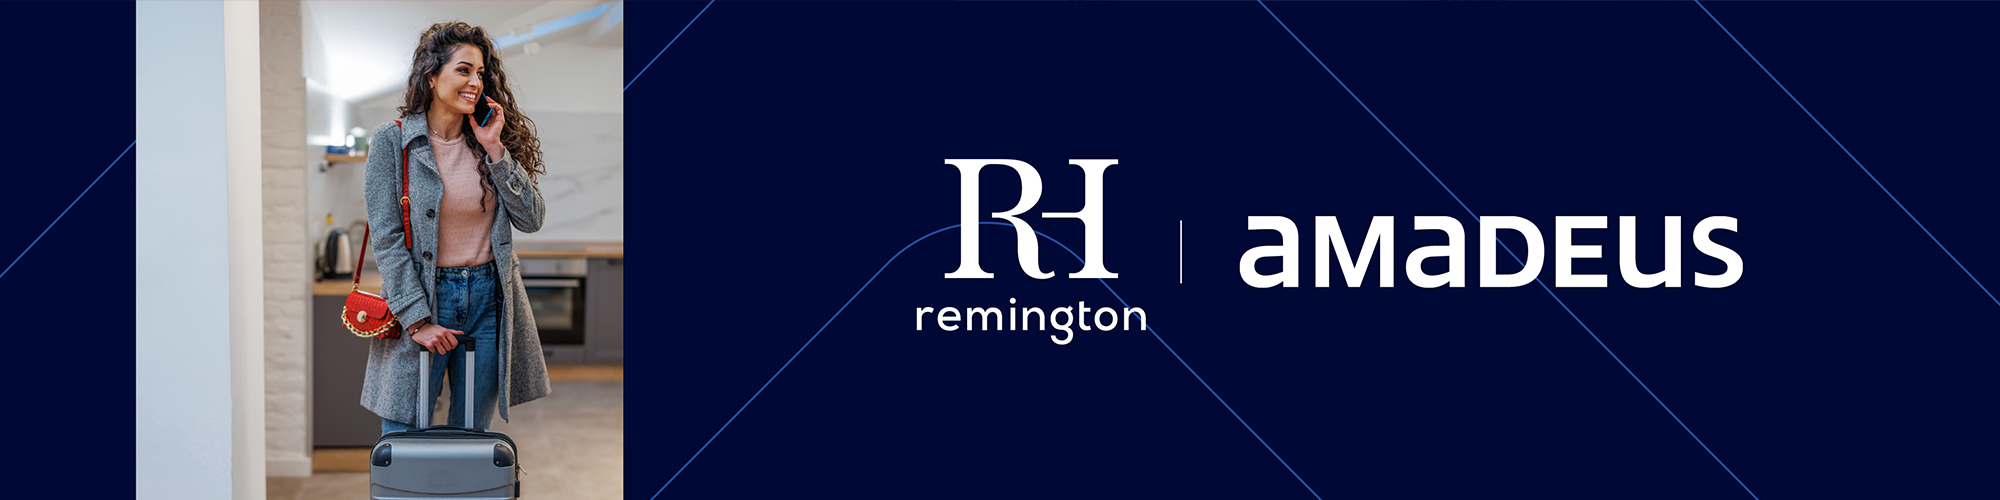 Remington Hospitality Expands Partnership With Amadeus to Include Demand360+®